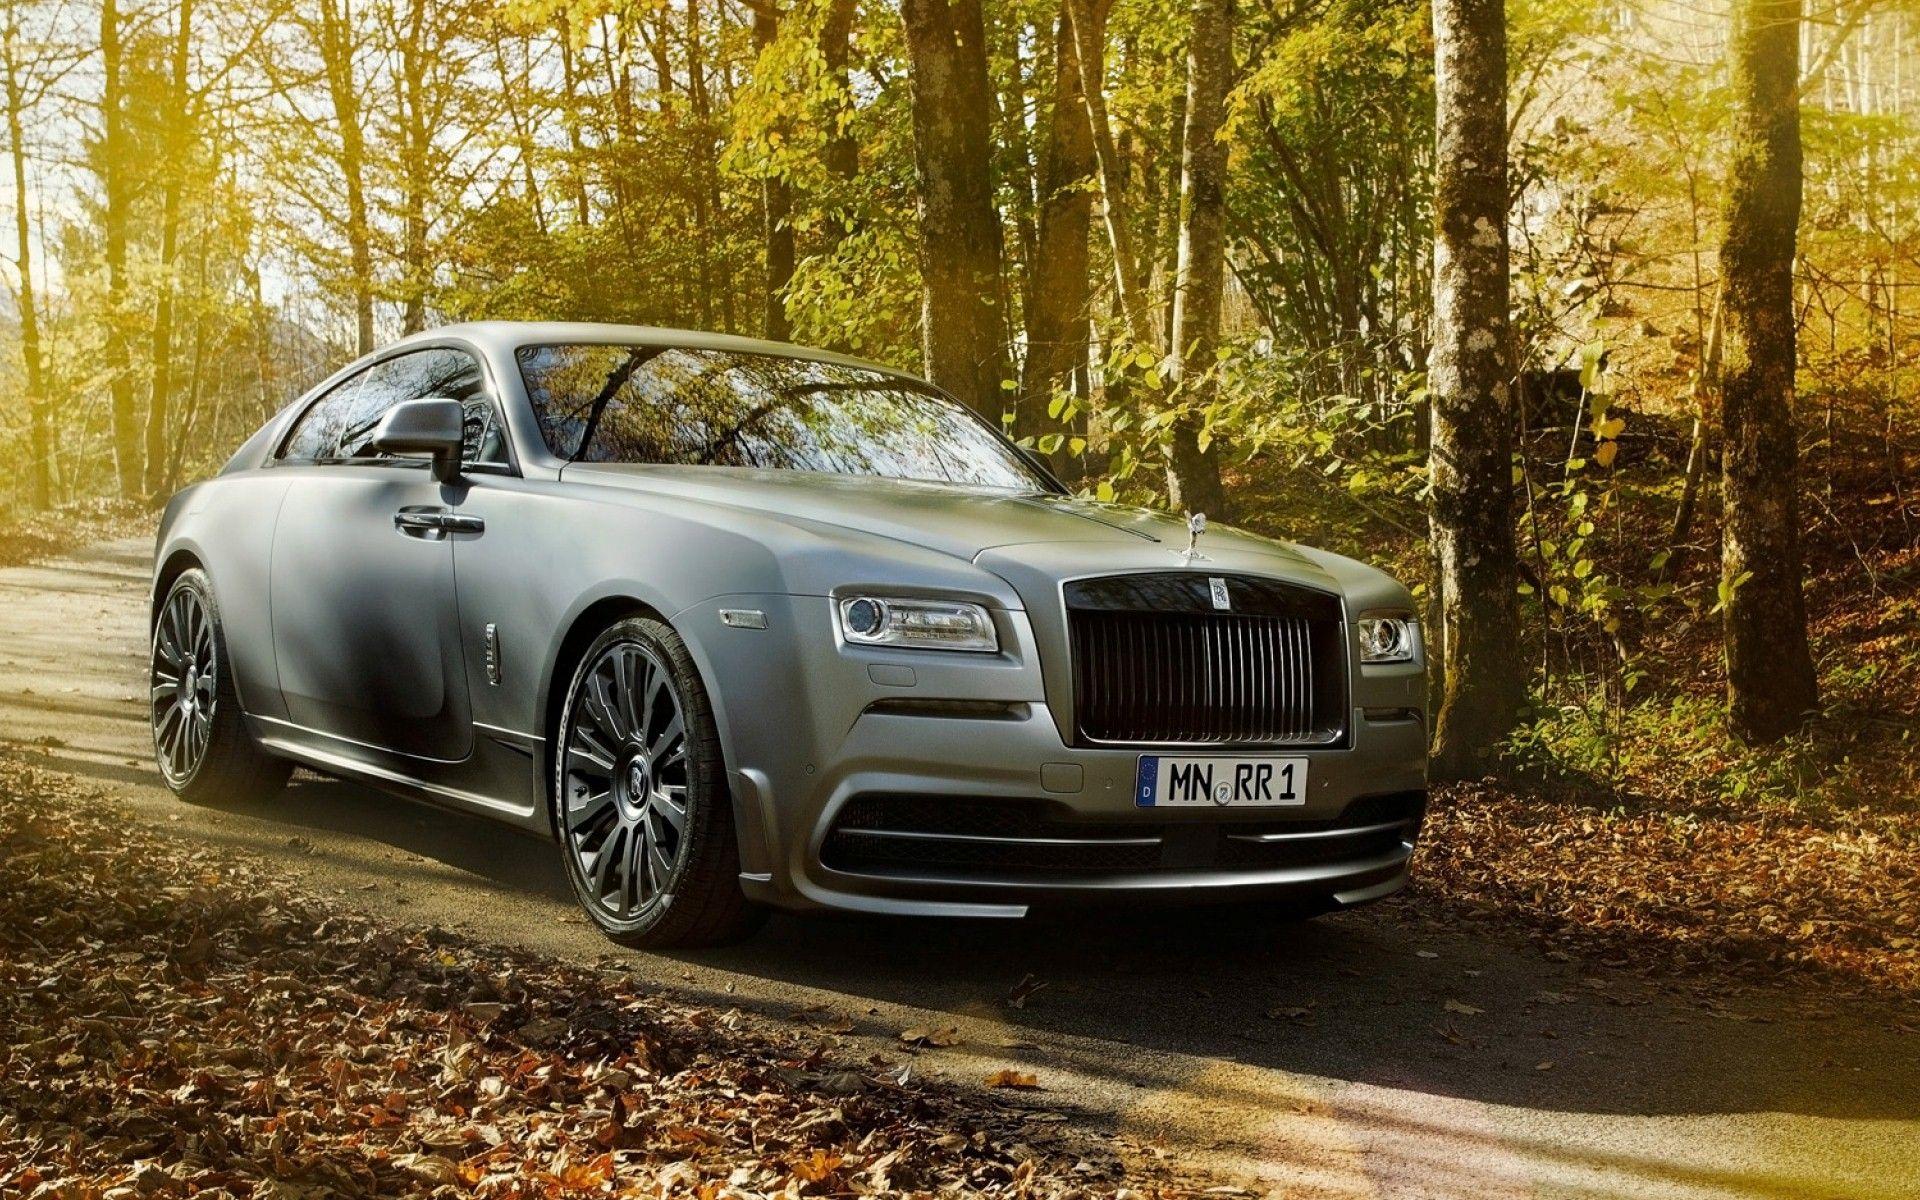 Rolls Royce Car Photos Free Download